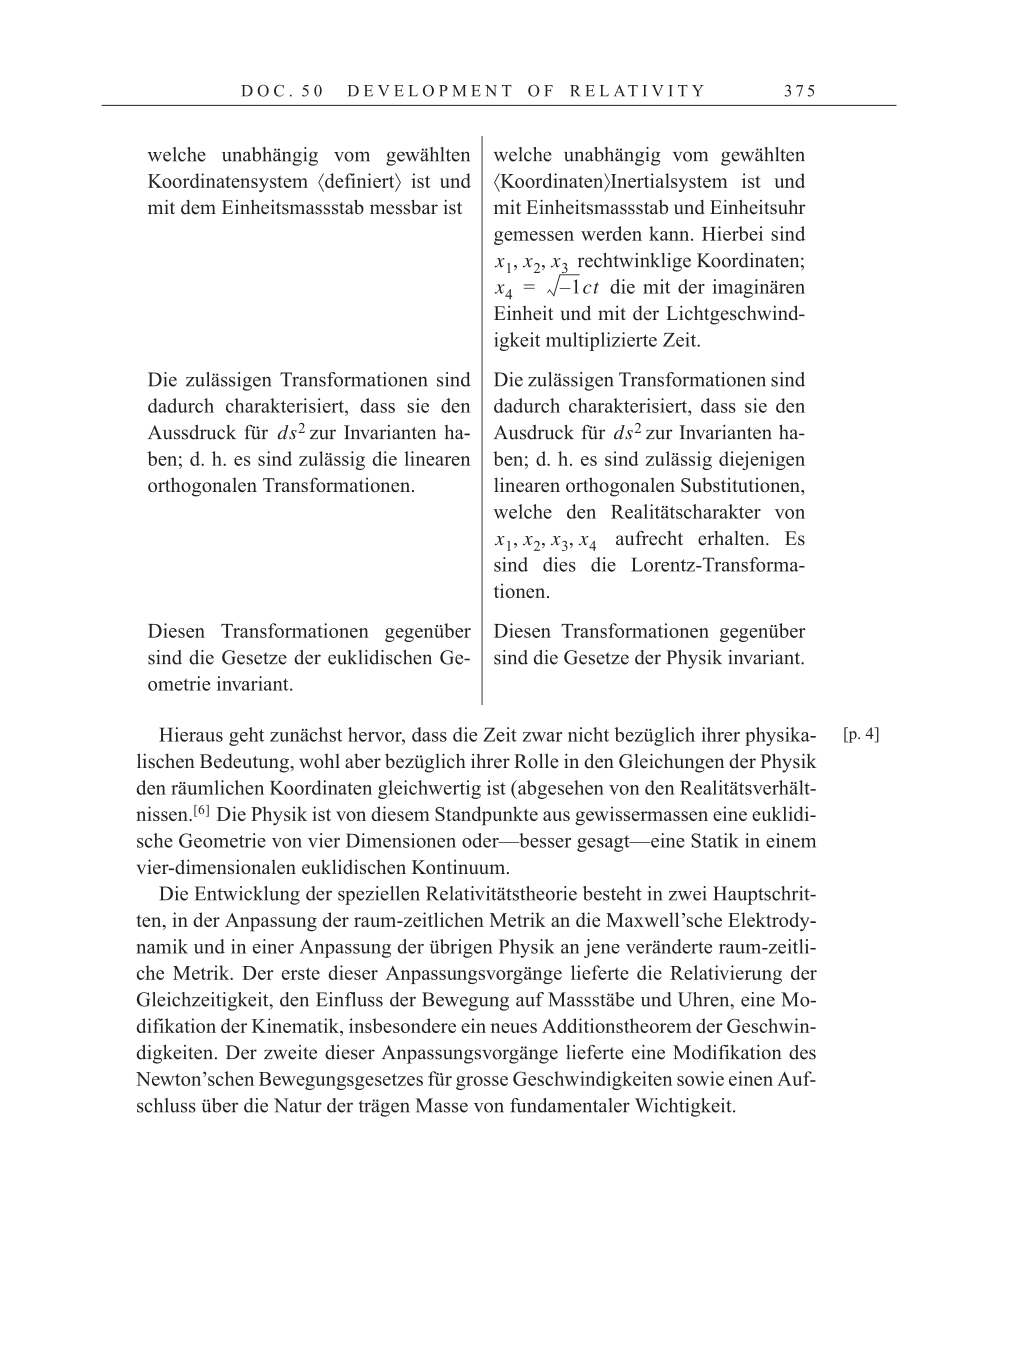 Volume 7: The Berlin Years: Writings, 1918-1921 page 375